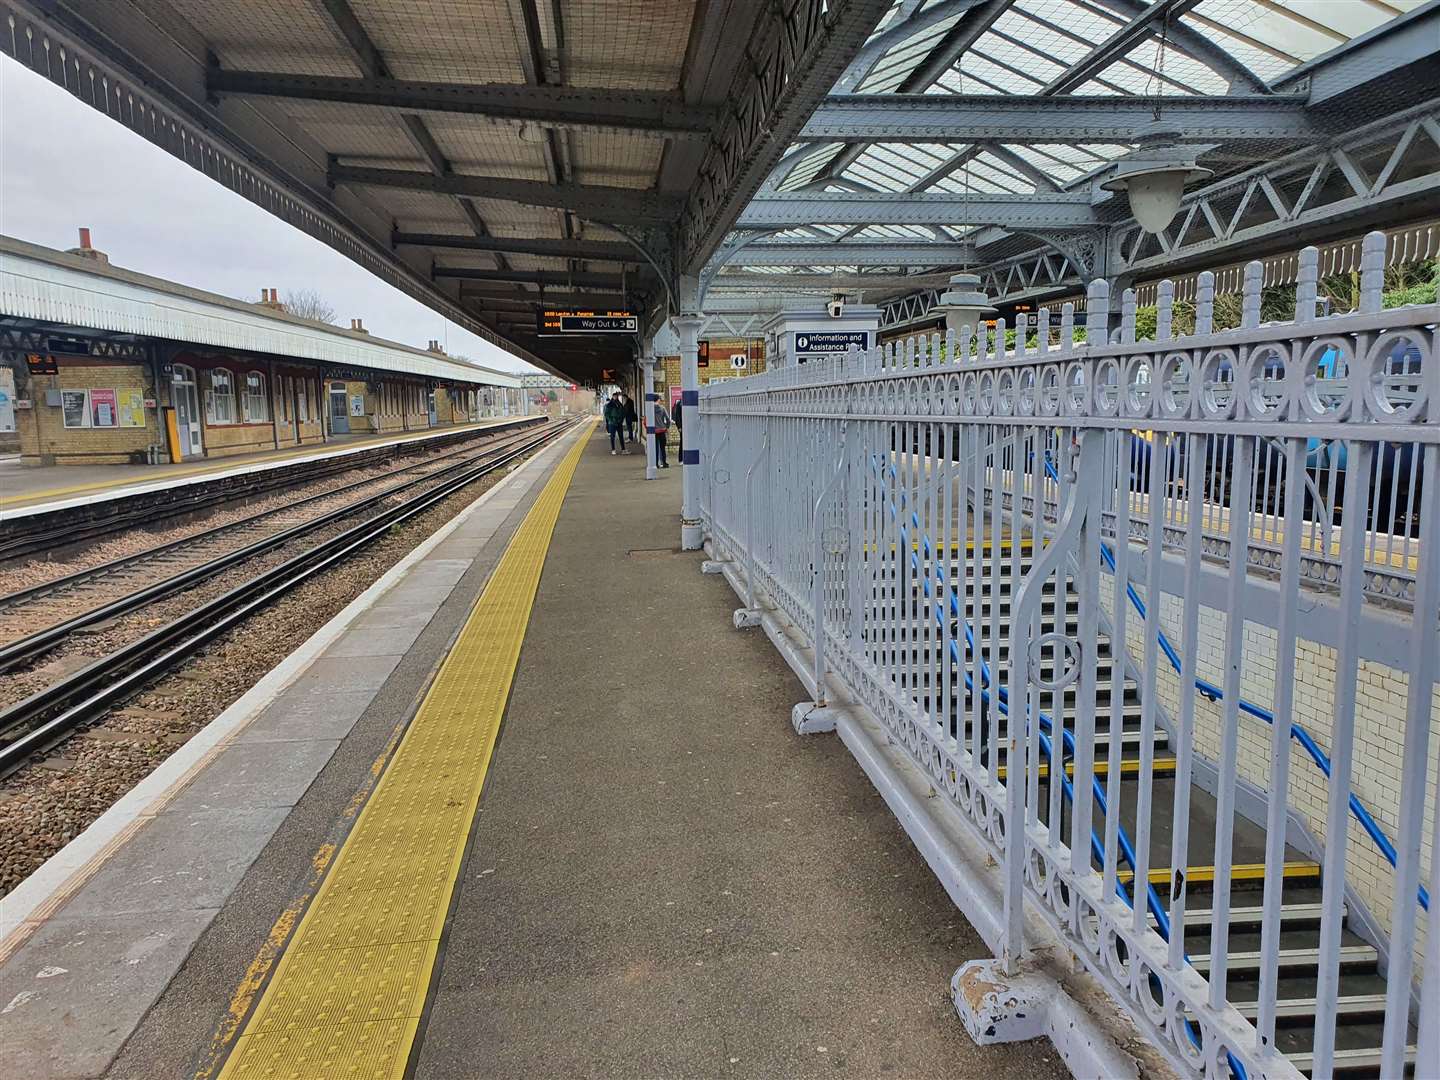 Faversham Train Station was quiet on Saturday morning